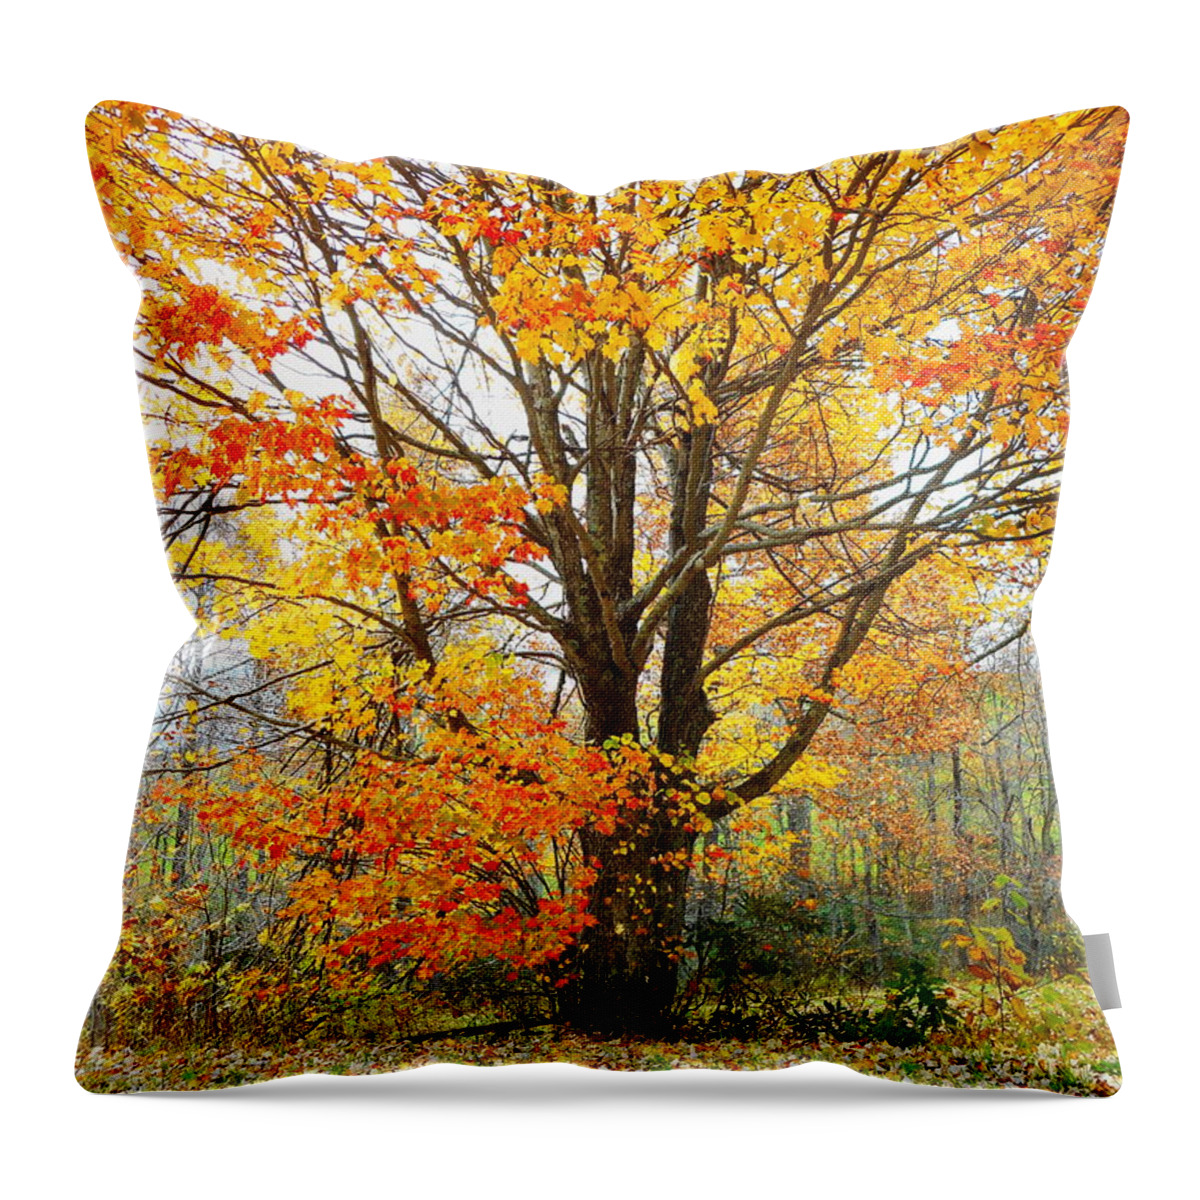 Autumn Throw Pillow featuring the photograph Memories of Autumn by Diannah Lynch